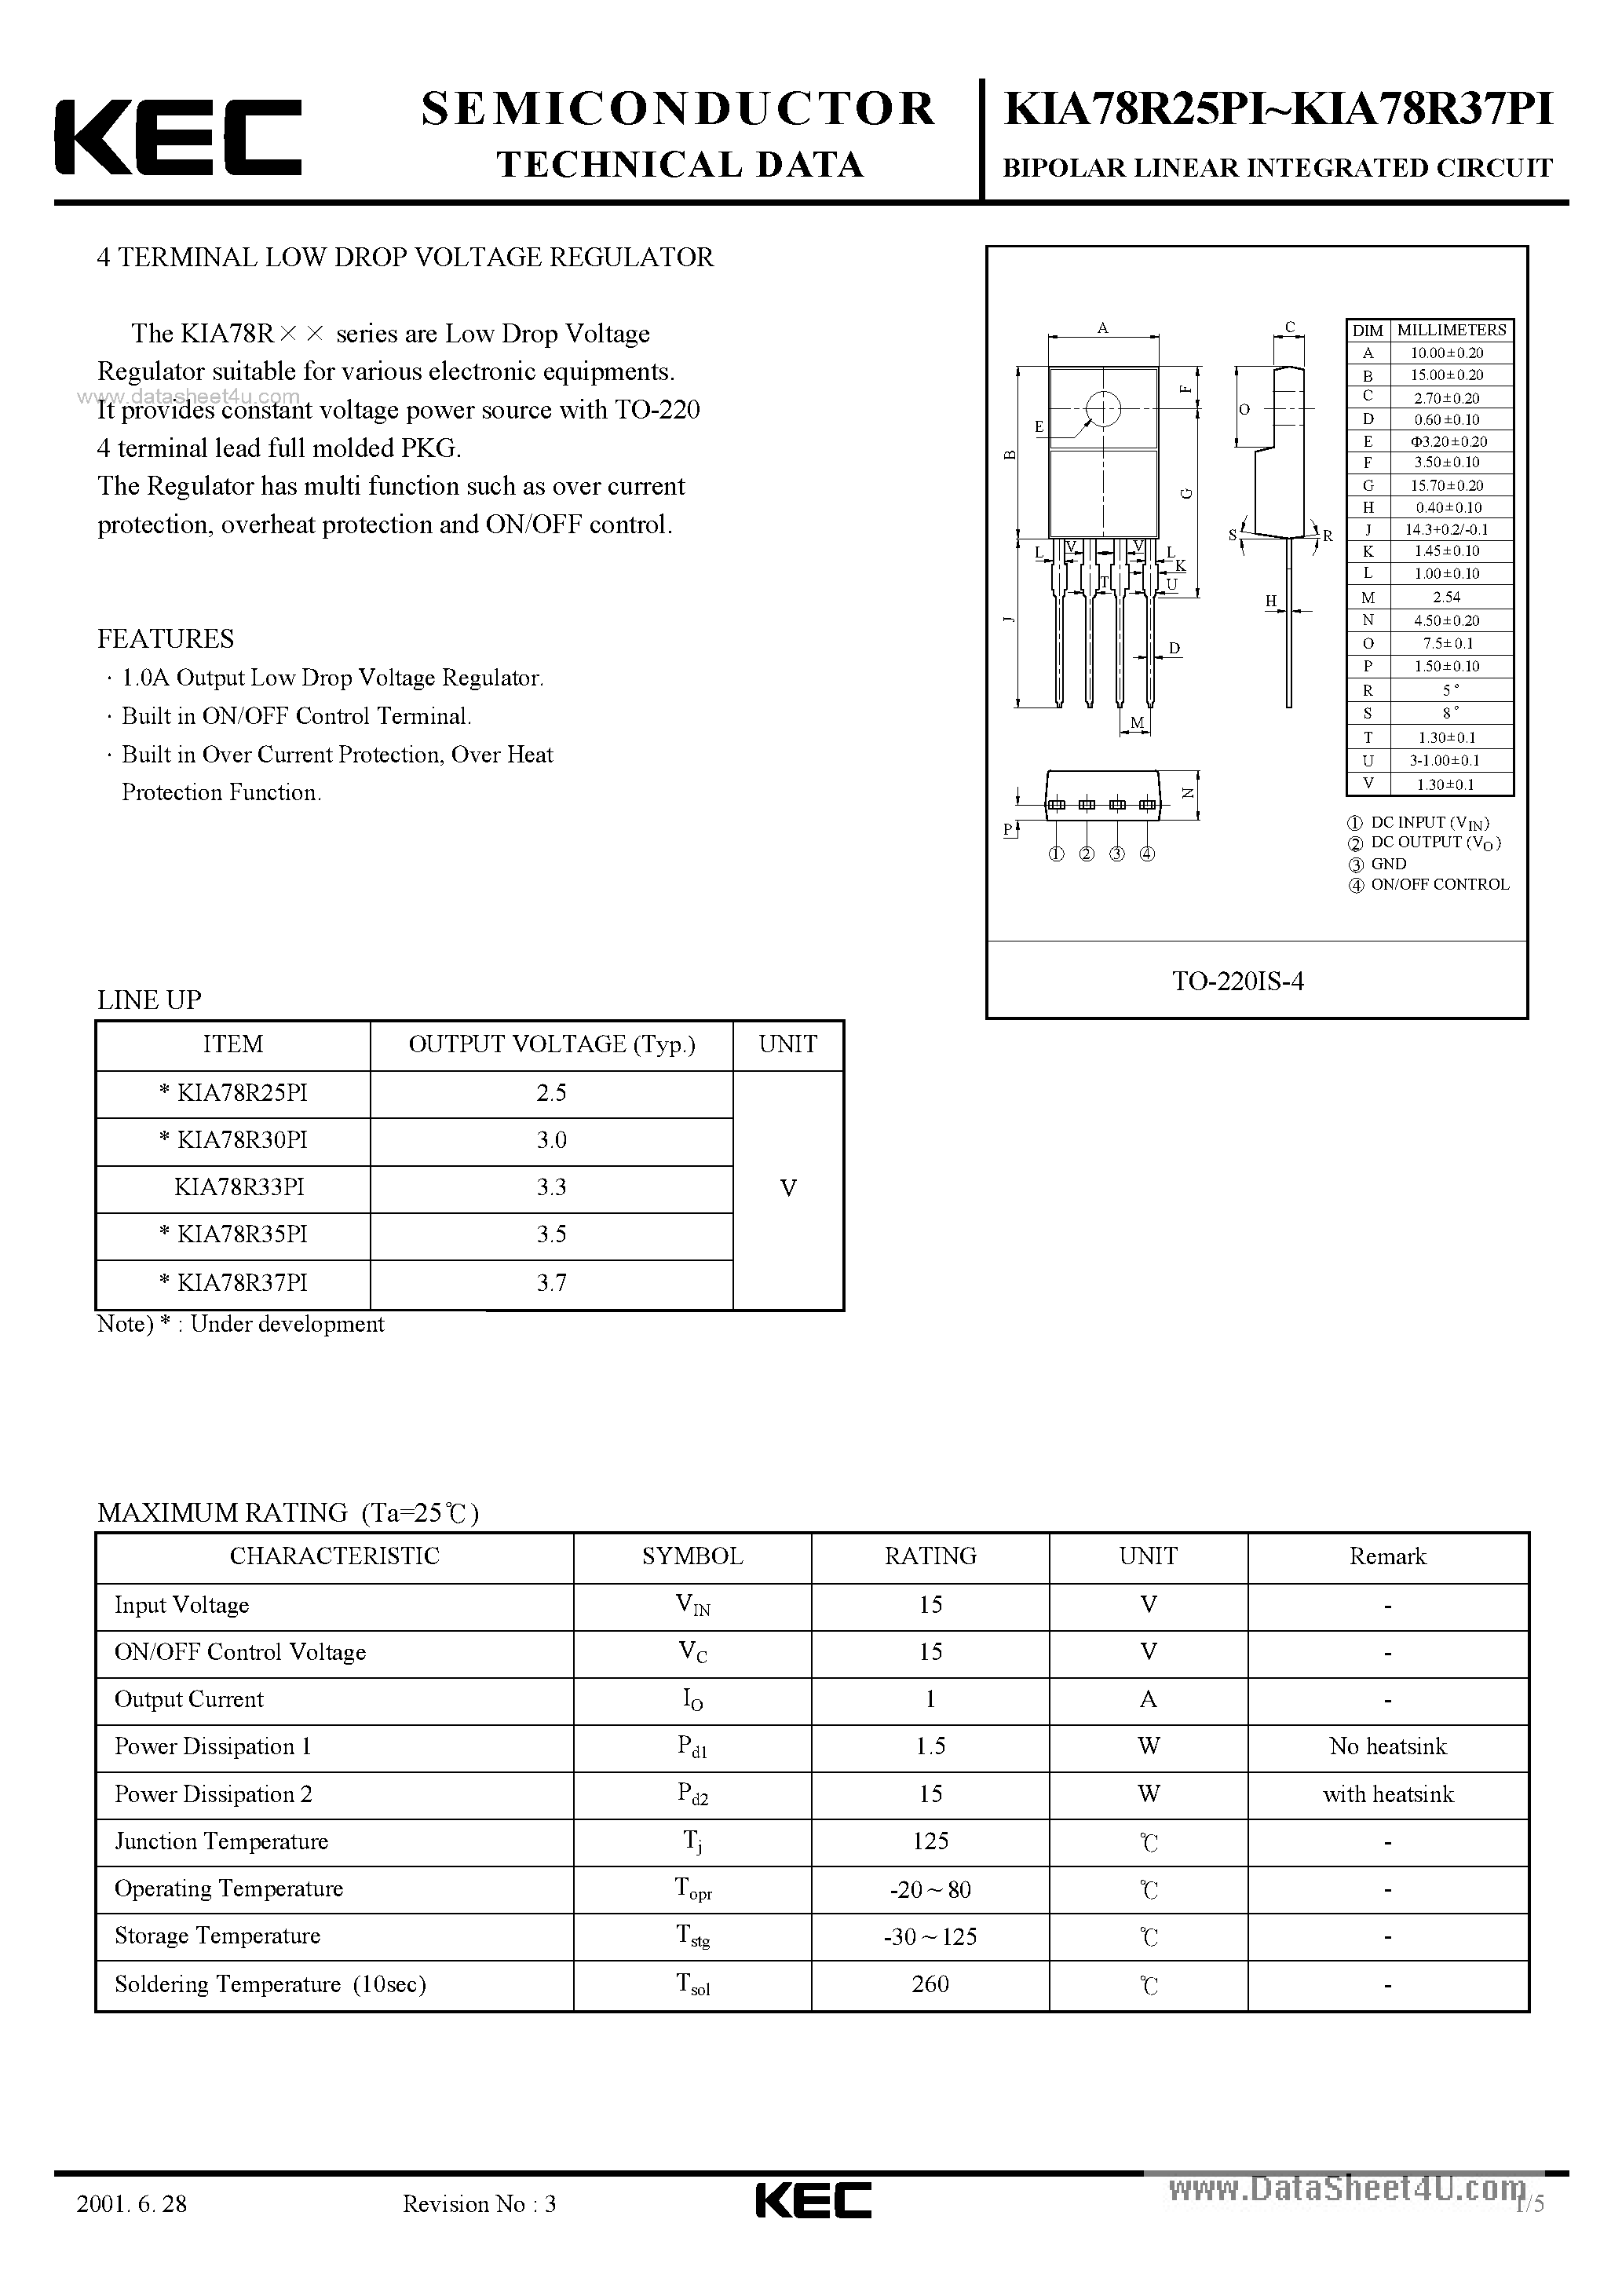 Datasheet KIA78R25PI - (KIA78R25PI - KIA78R37PI) Bipolar Linear Integrated Circuit page 1